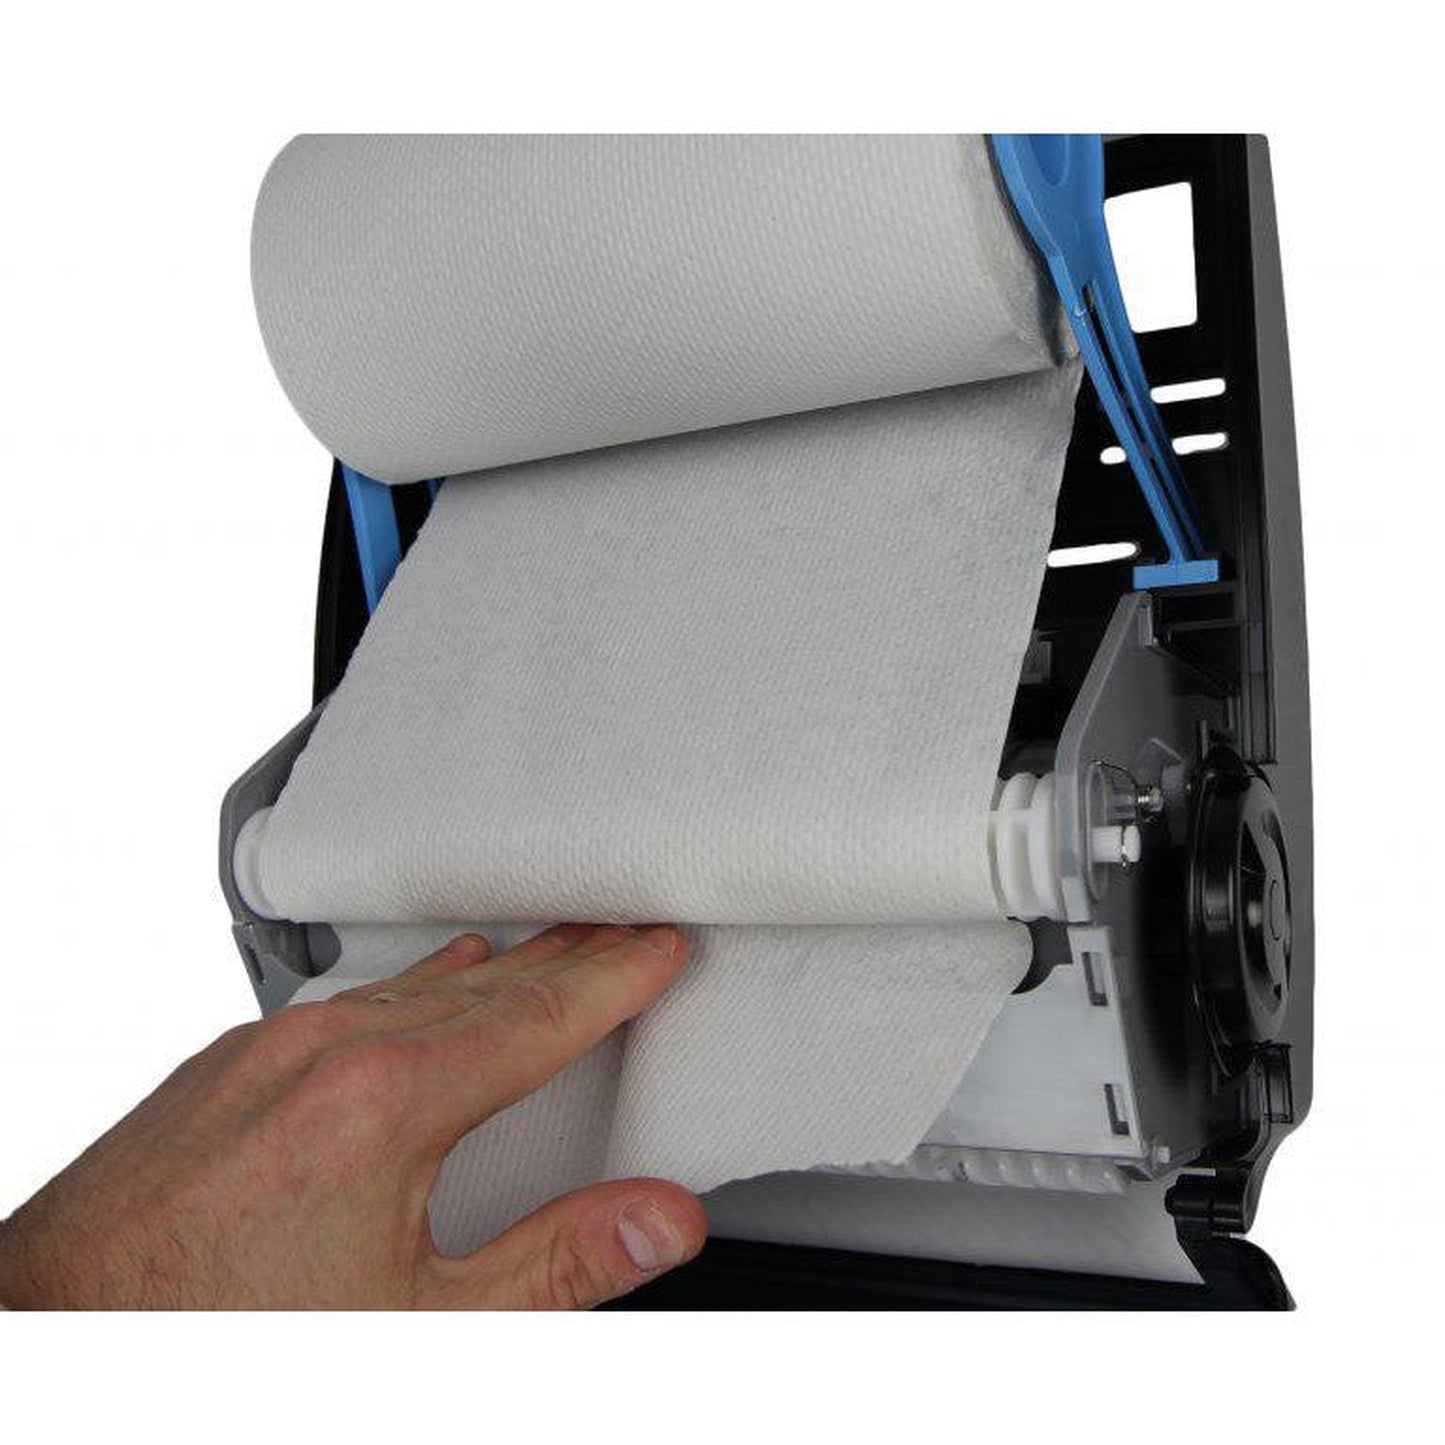 Frost 11.4 x 8.9 x 15 Black Translucent Paper Product Dispenser